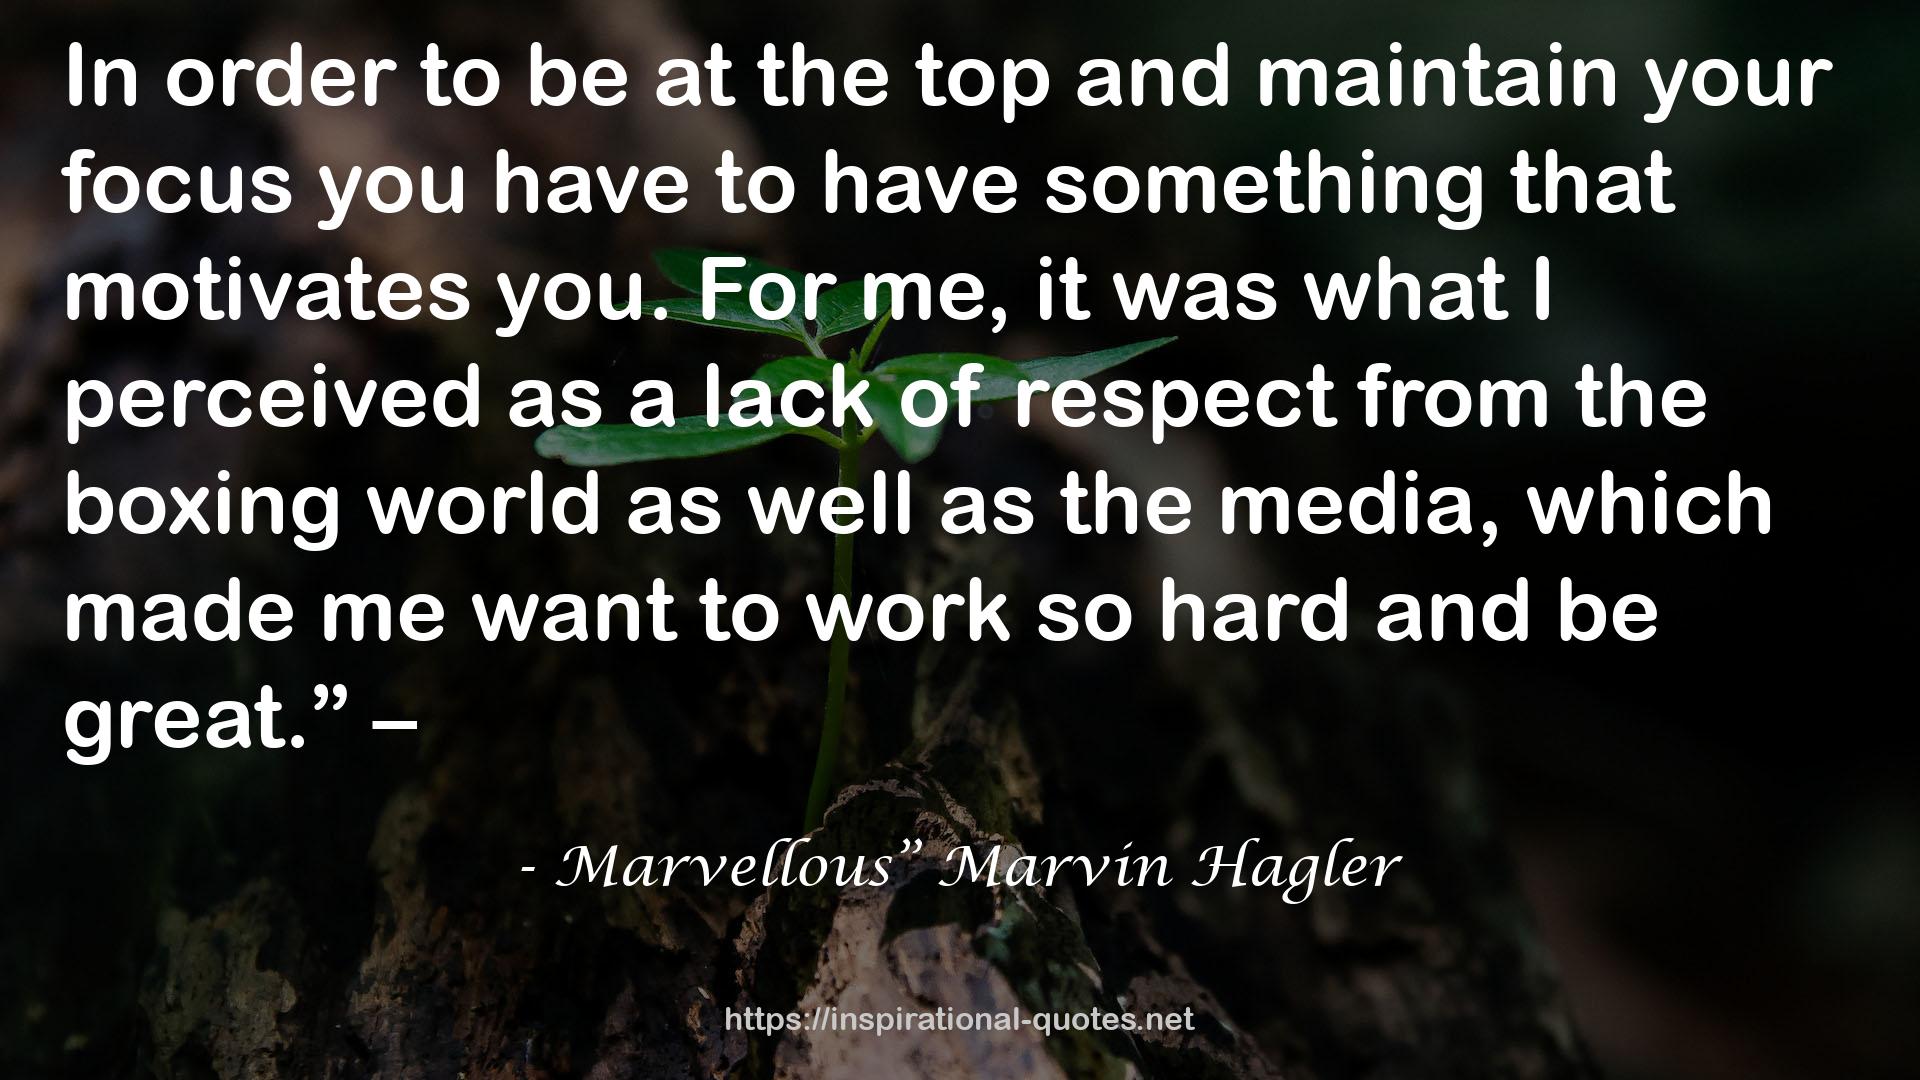 Marvellous” Marvin Hagler QUOTES